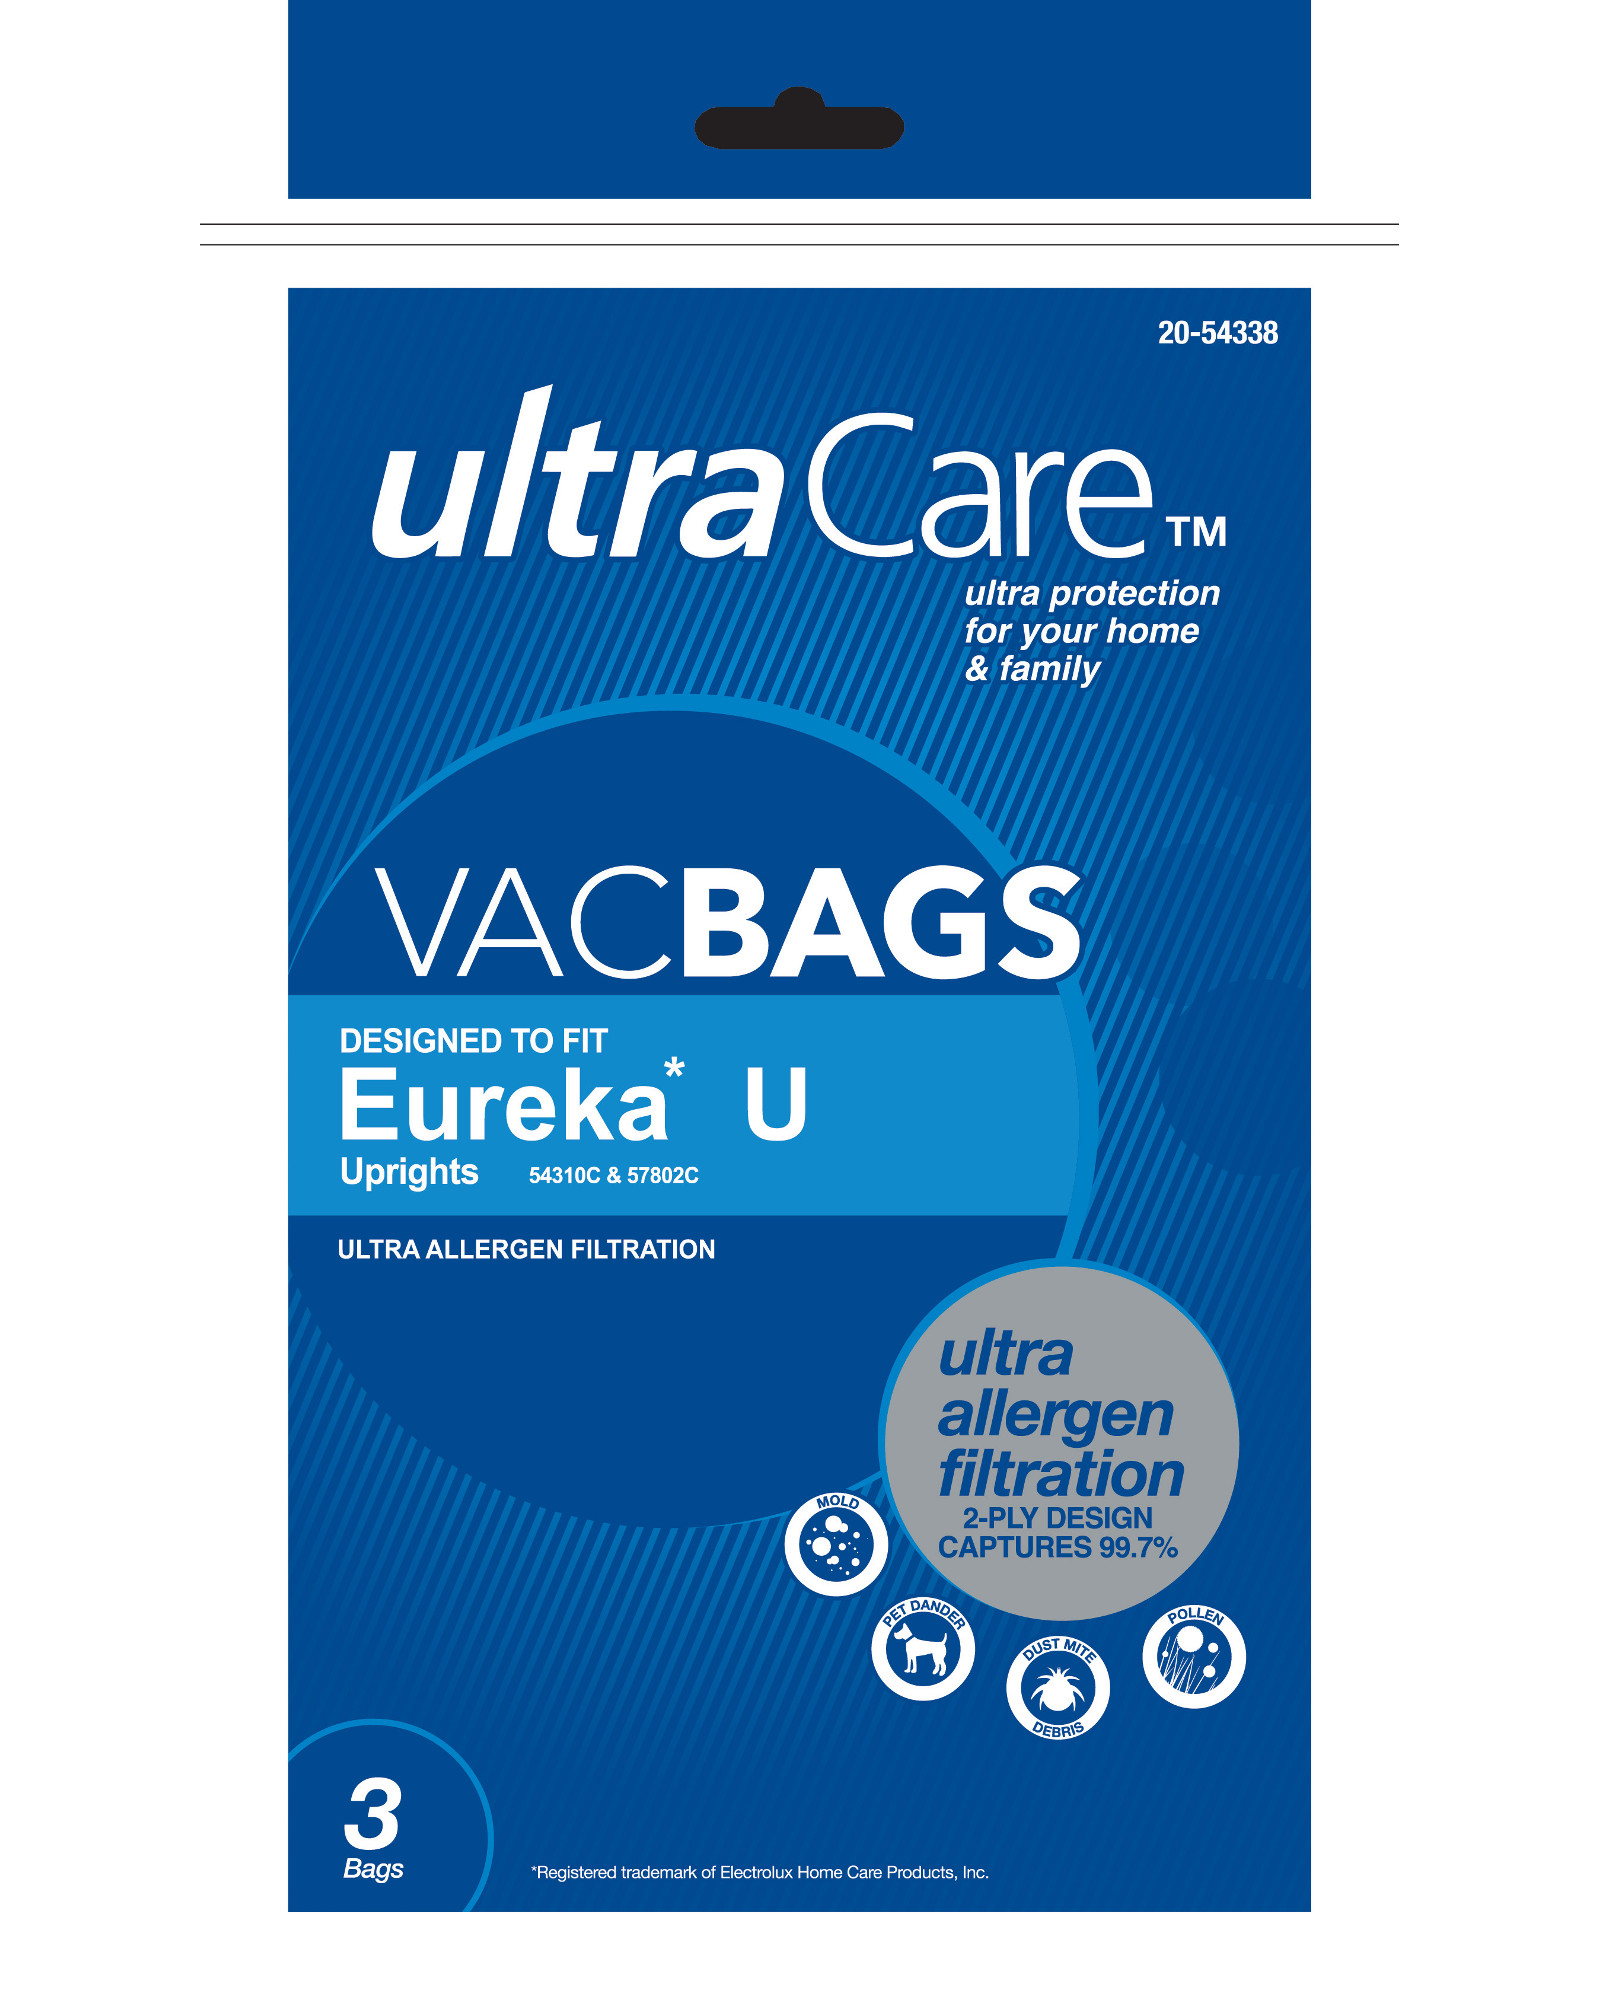 UltraCare UC47701-6 3-Pack Premium Vacuum Bags for Eureka U Upright Cleaners